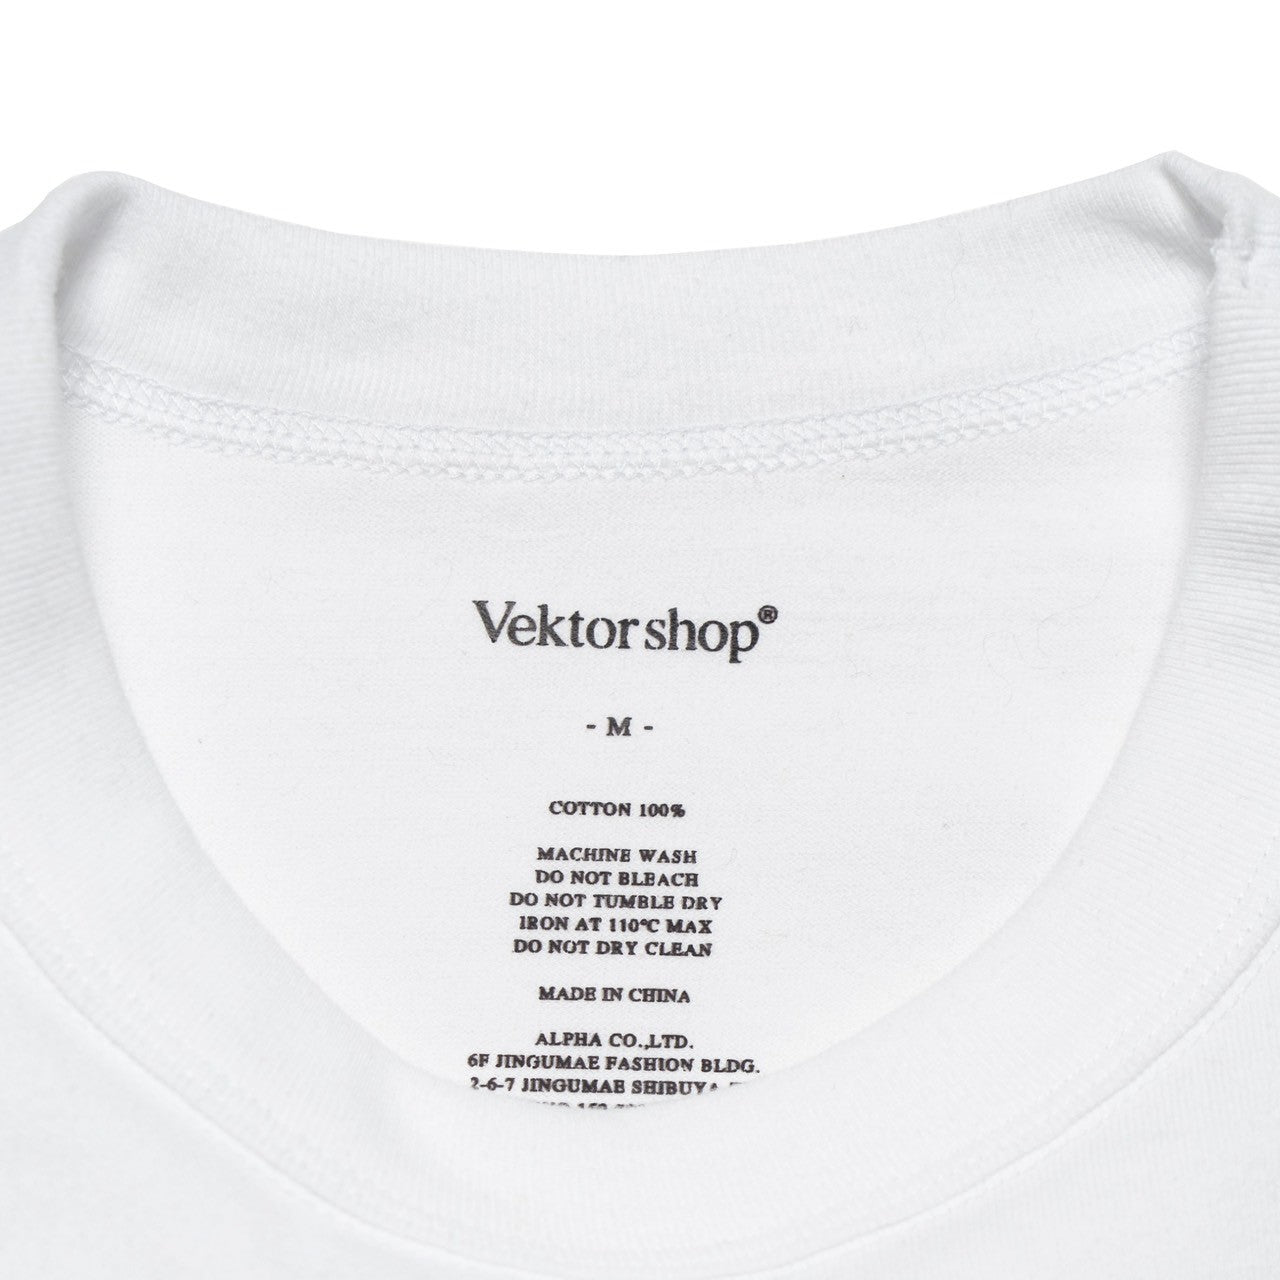 Vektor shop® / Vektor shop Blank LS Tee